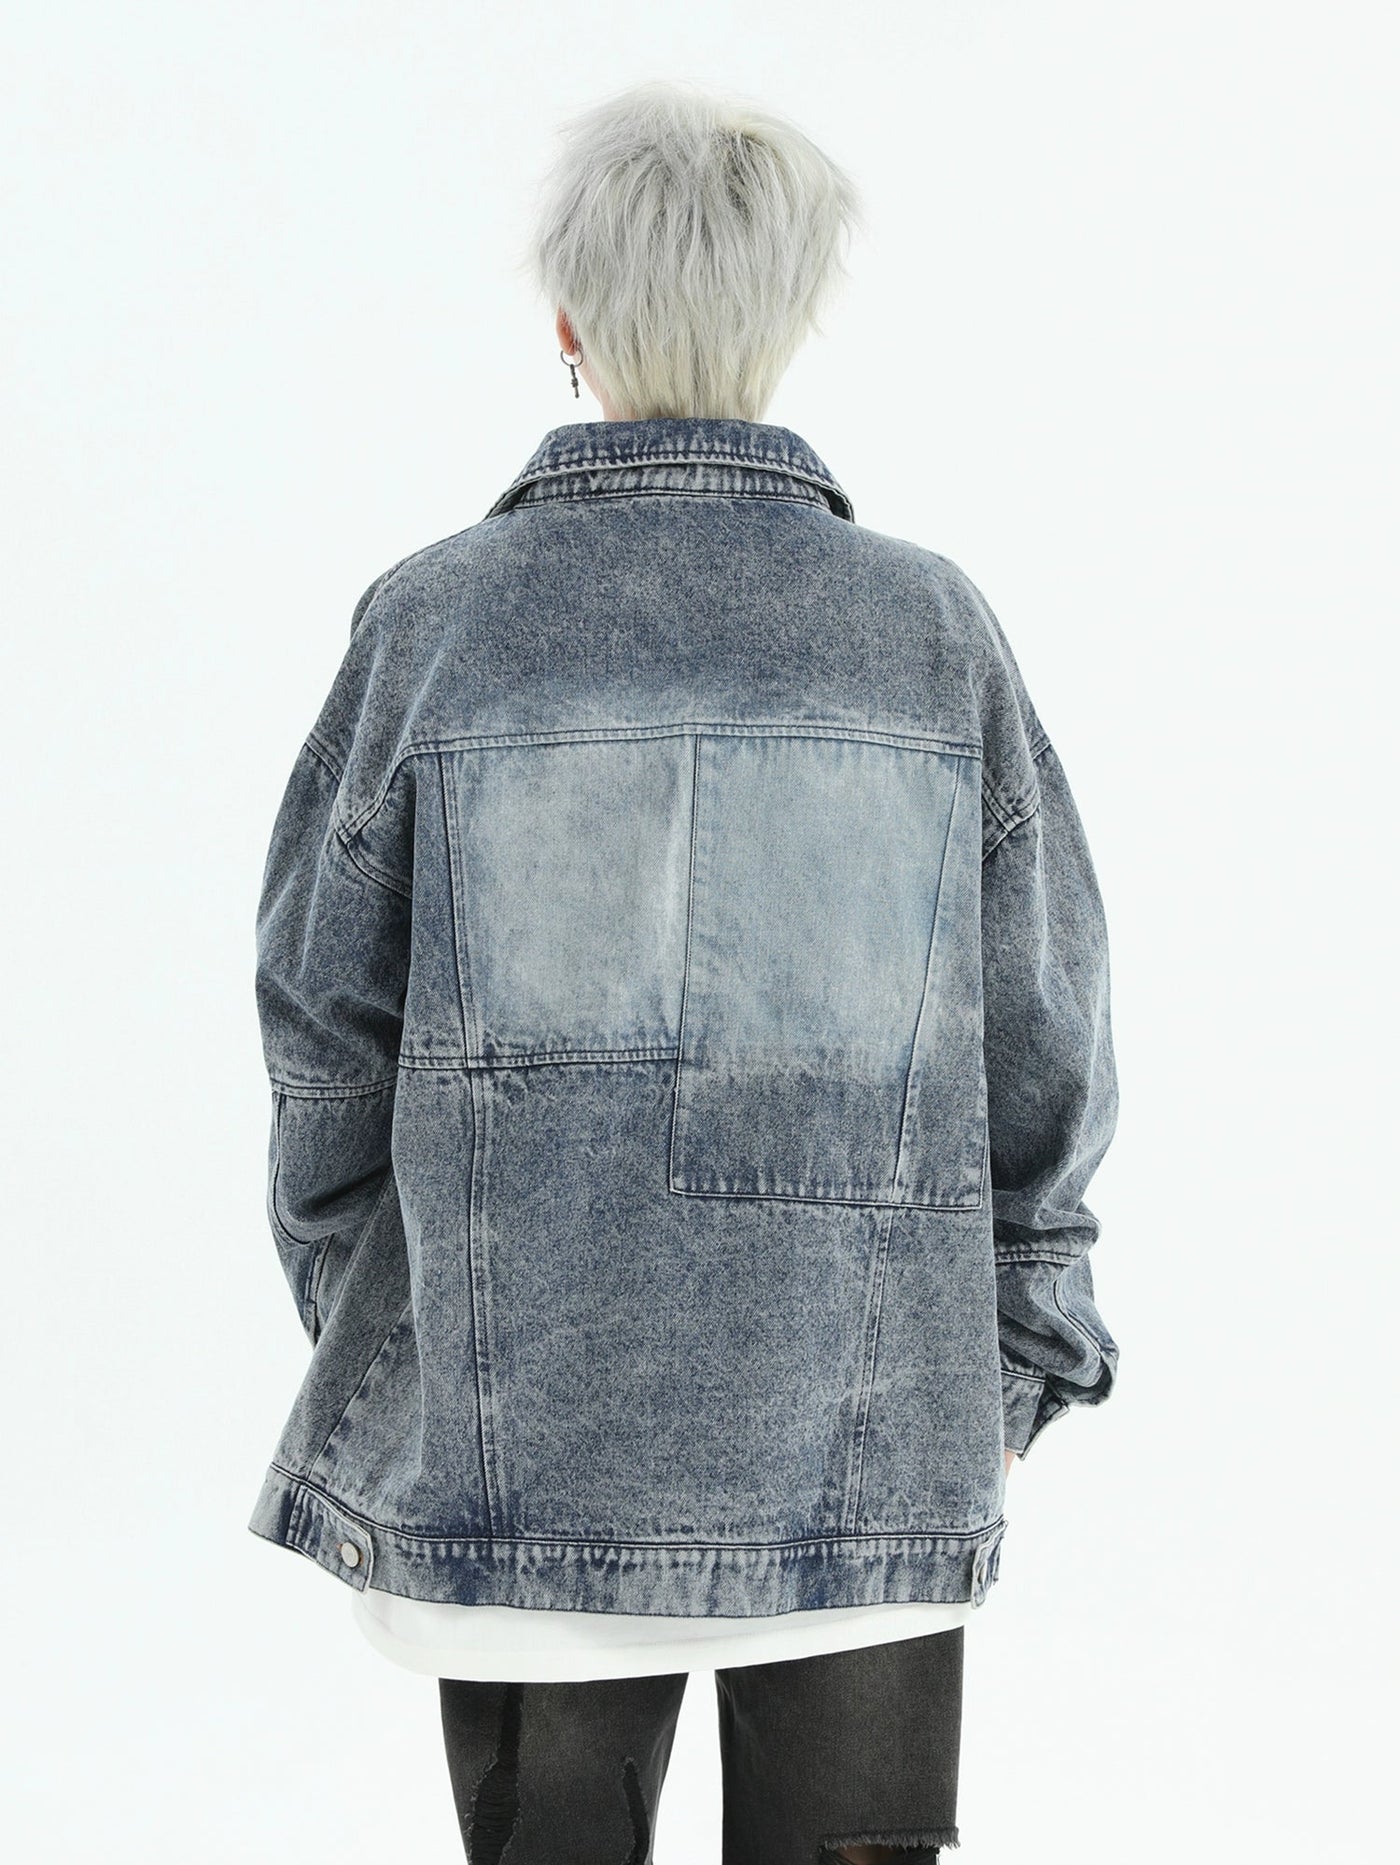 Fade Spots Detail Denim Jacket Korean Street Fashion Jacket By INS Korea Shop Online at OH Vault